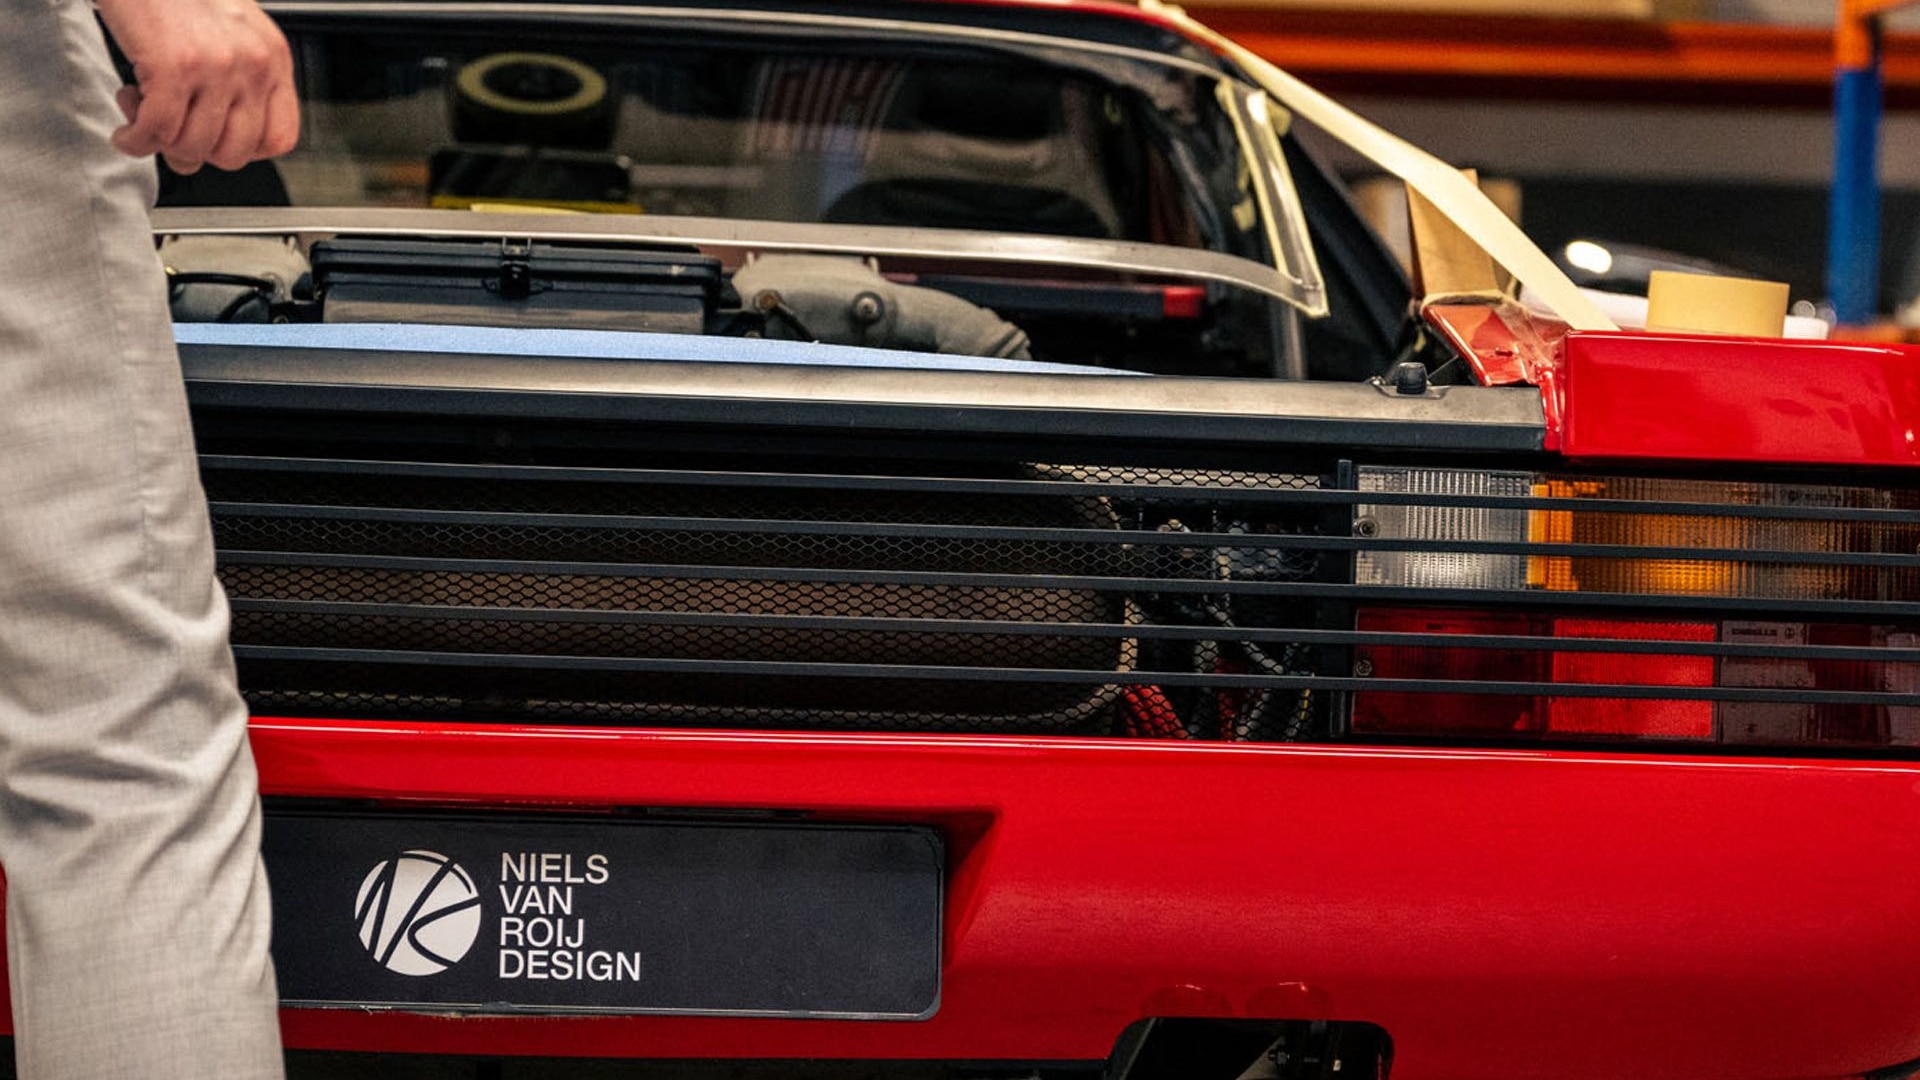 Ferrari Testarossa targa conversion at Niels van Roij Design